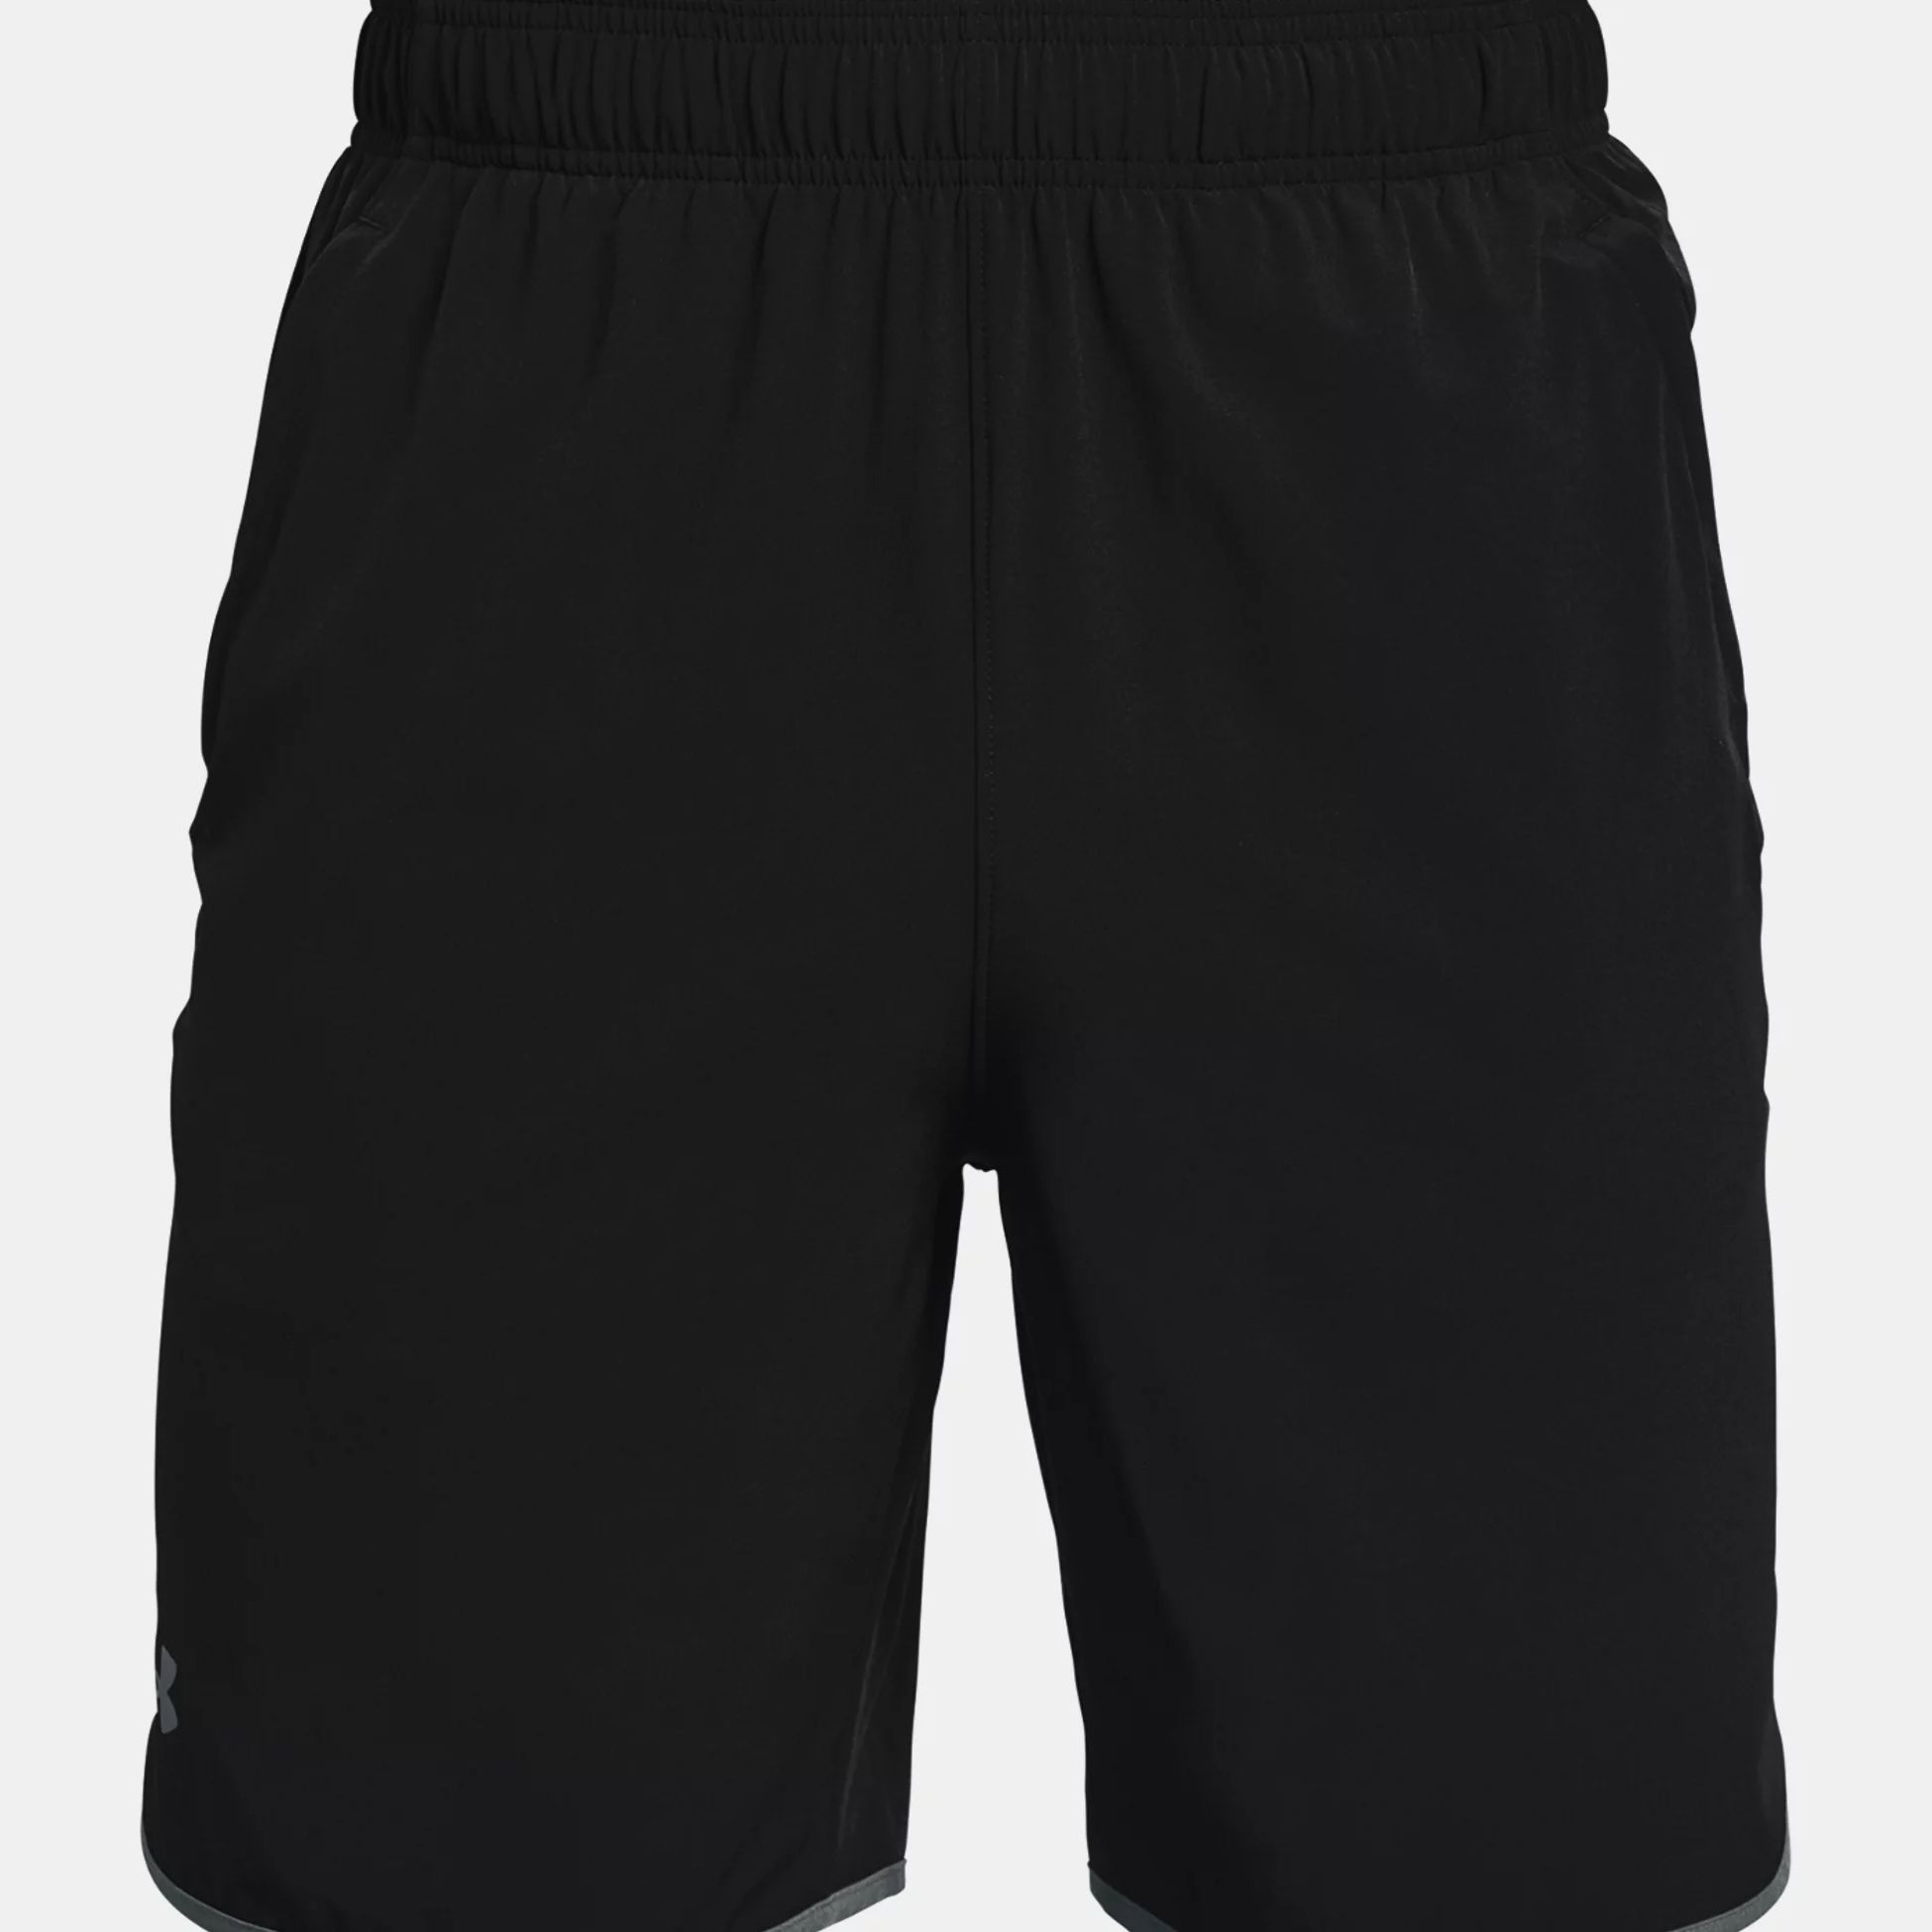 Shorts -  under armour UA HIIT Woven Shorts